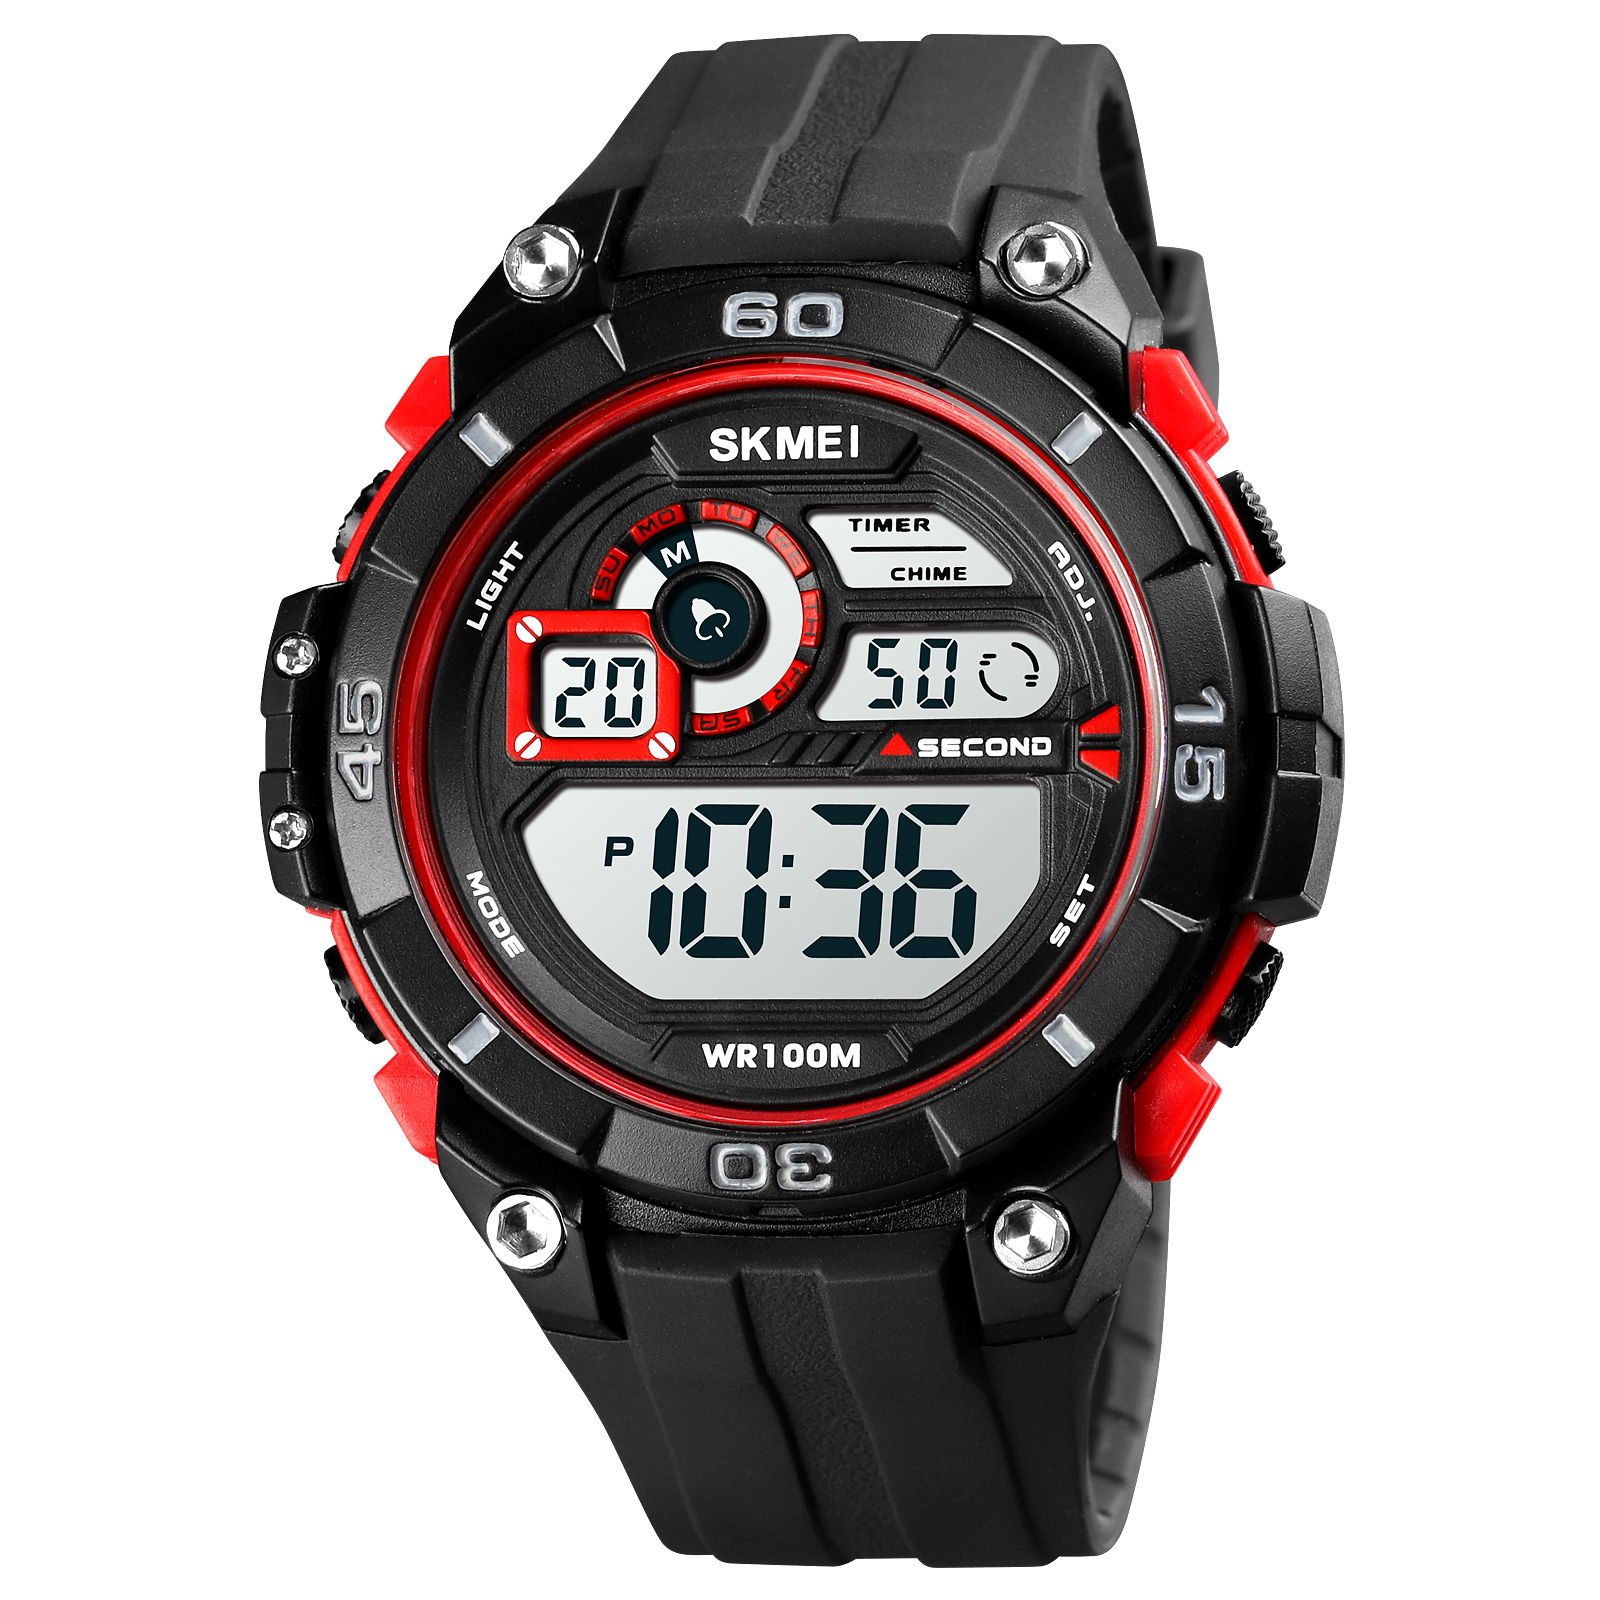 waterproof digital watches-Skmei Watch Manufacture Co.,Ltd